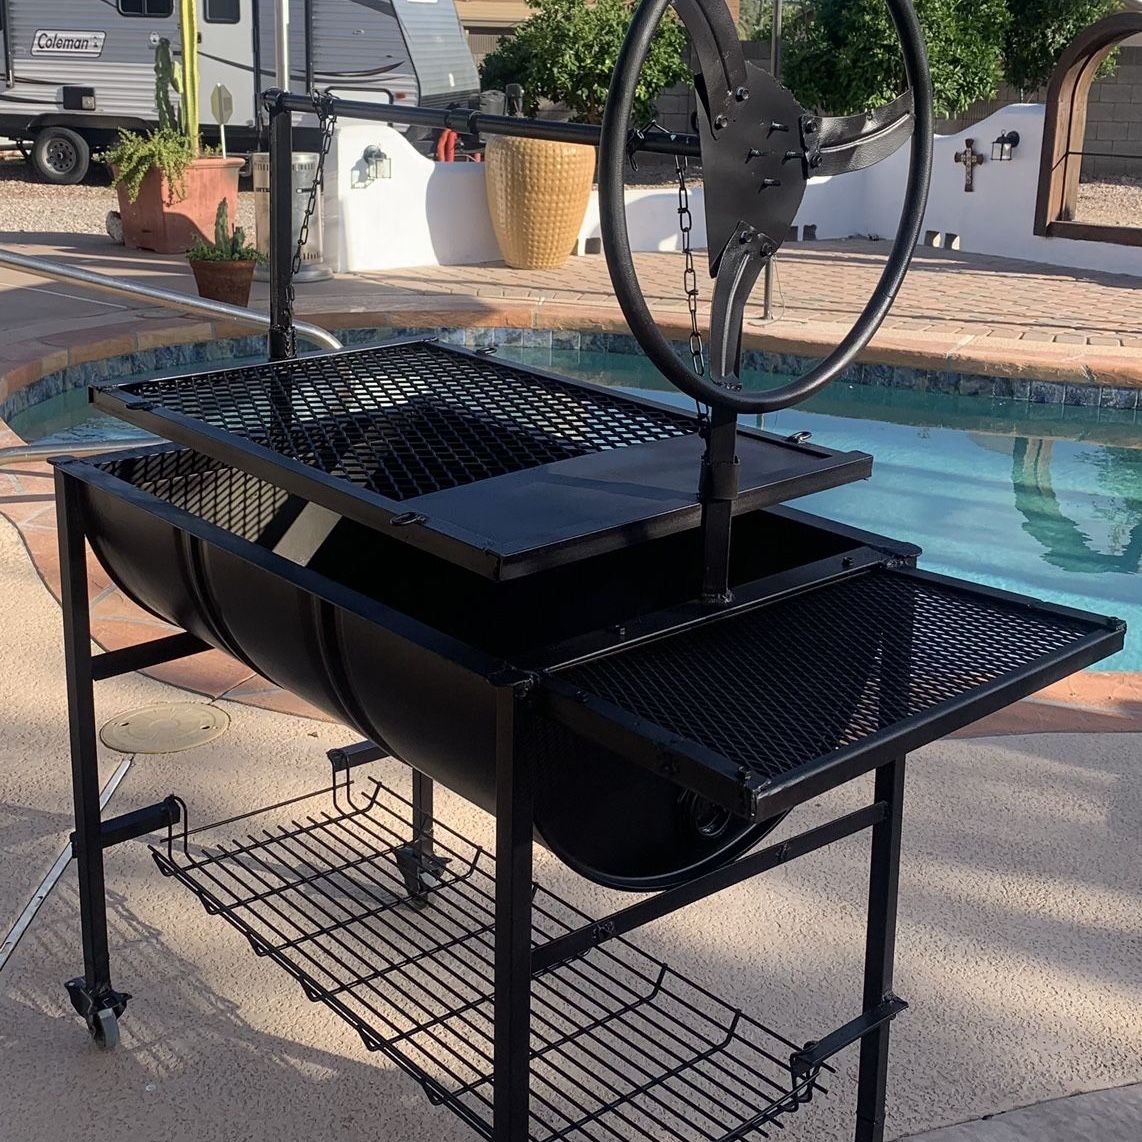 12v electric grill. Asador Electrico 12v for Sale in Phoenix, AZ - OfferUp